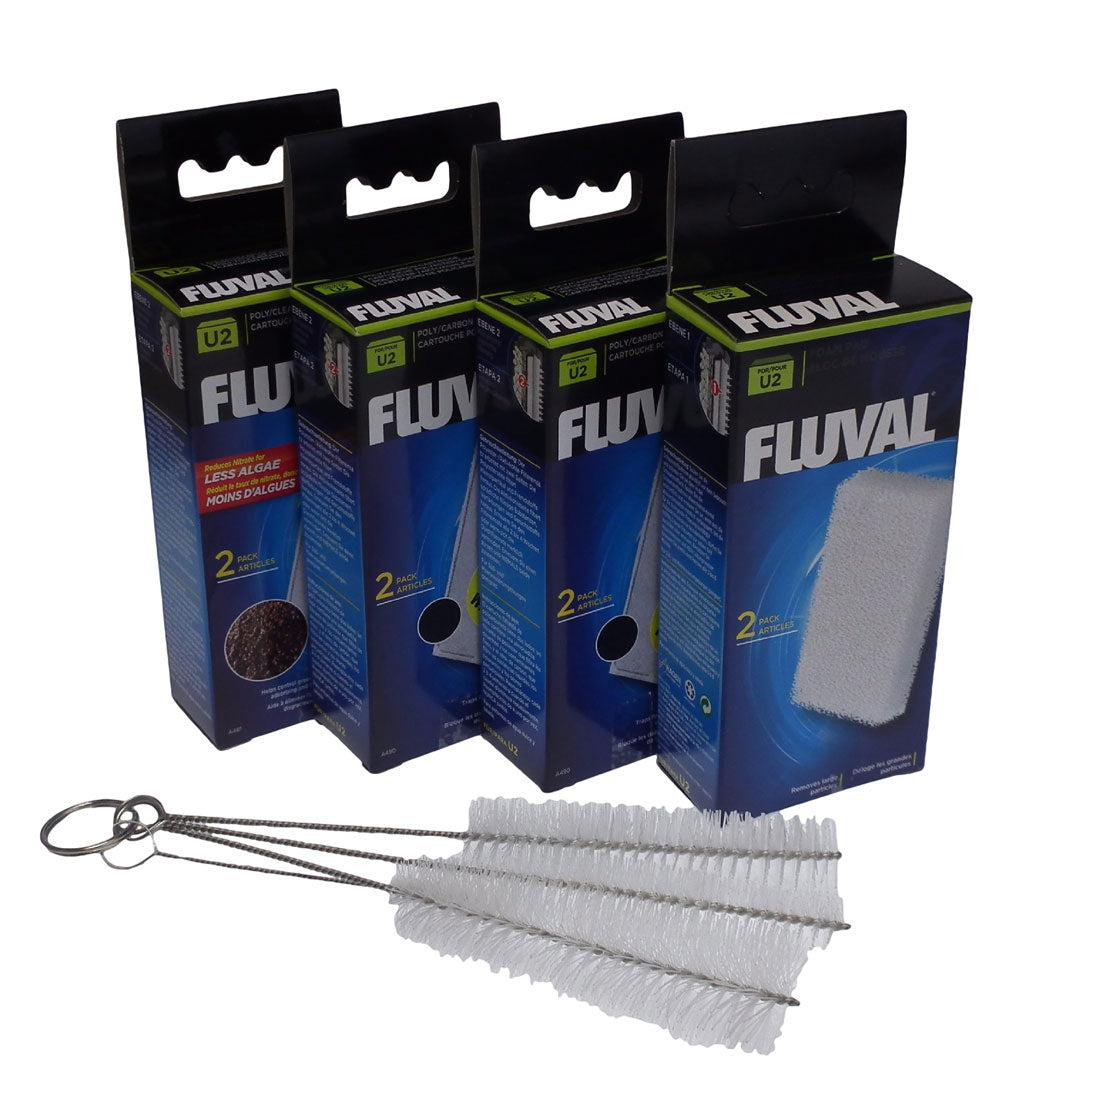 Service Kit for Fluval U2 Internal Filter